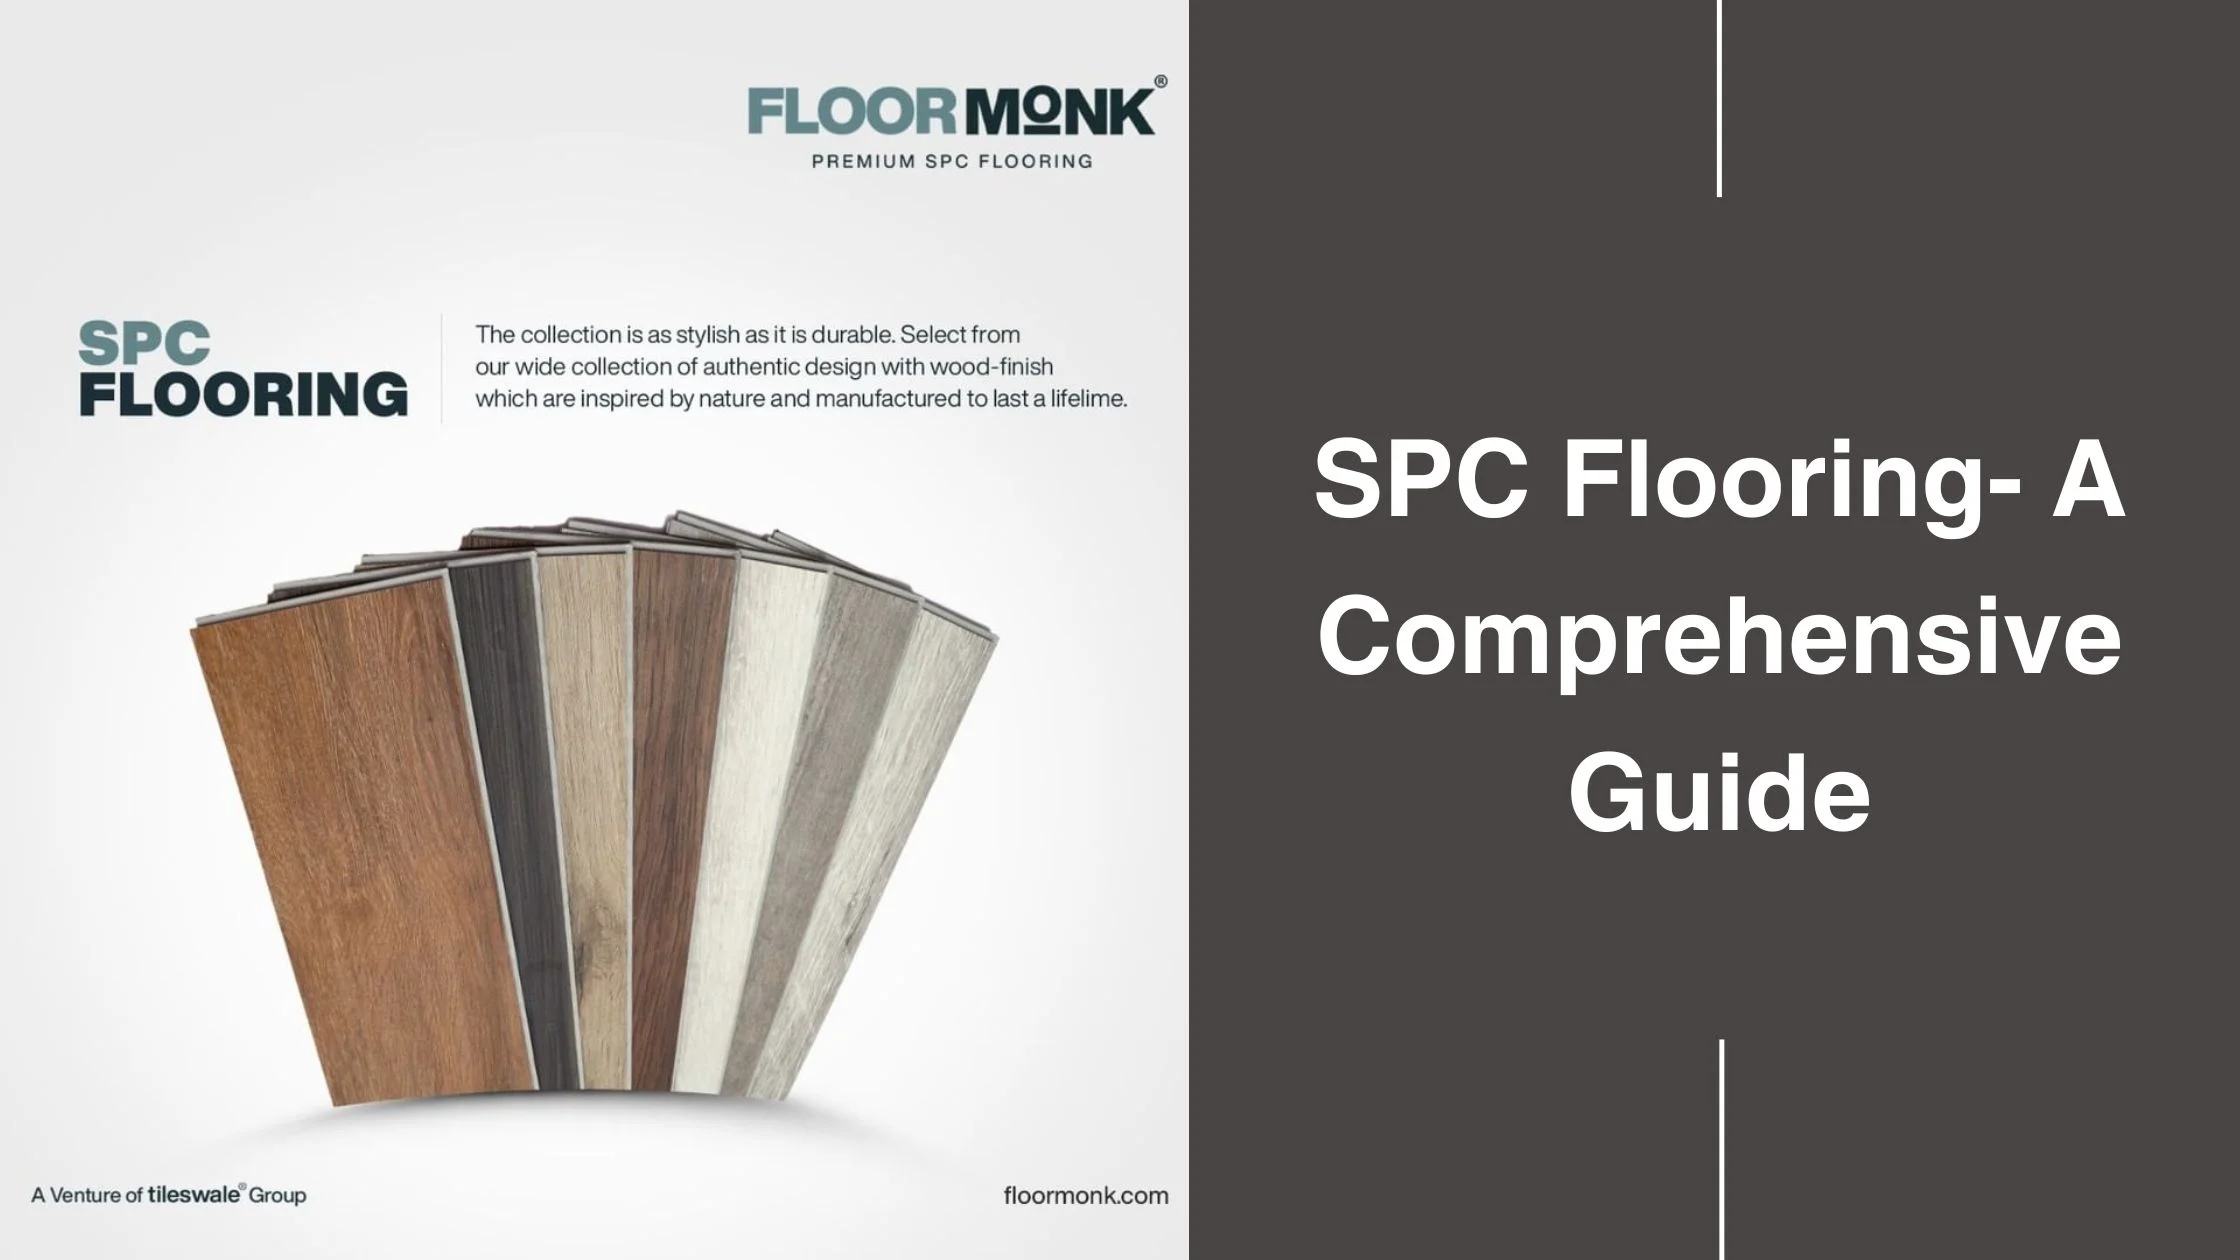 SPC Flooring- A Comprehensive Guide